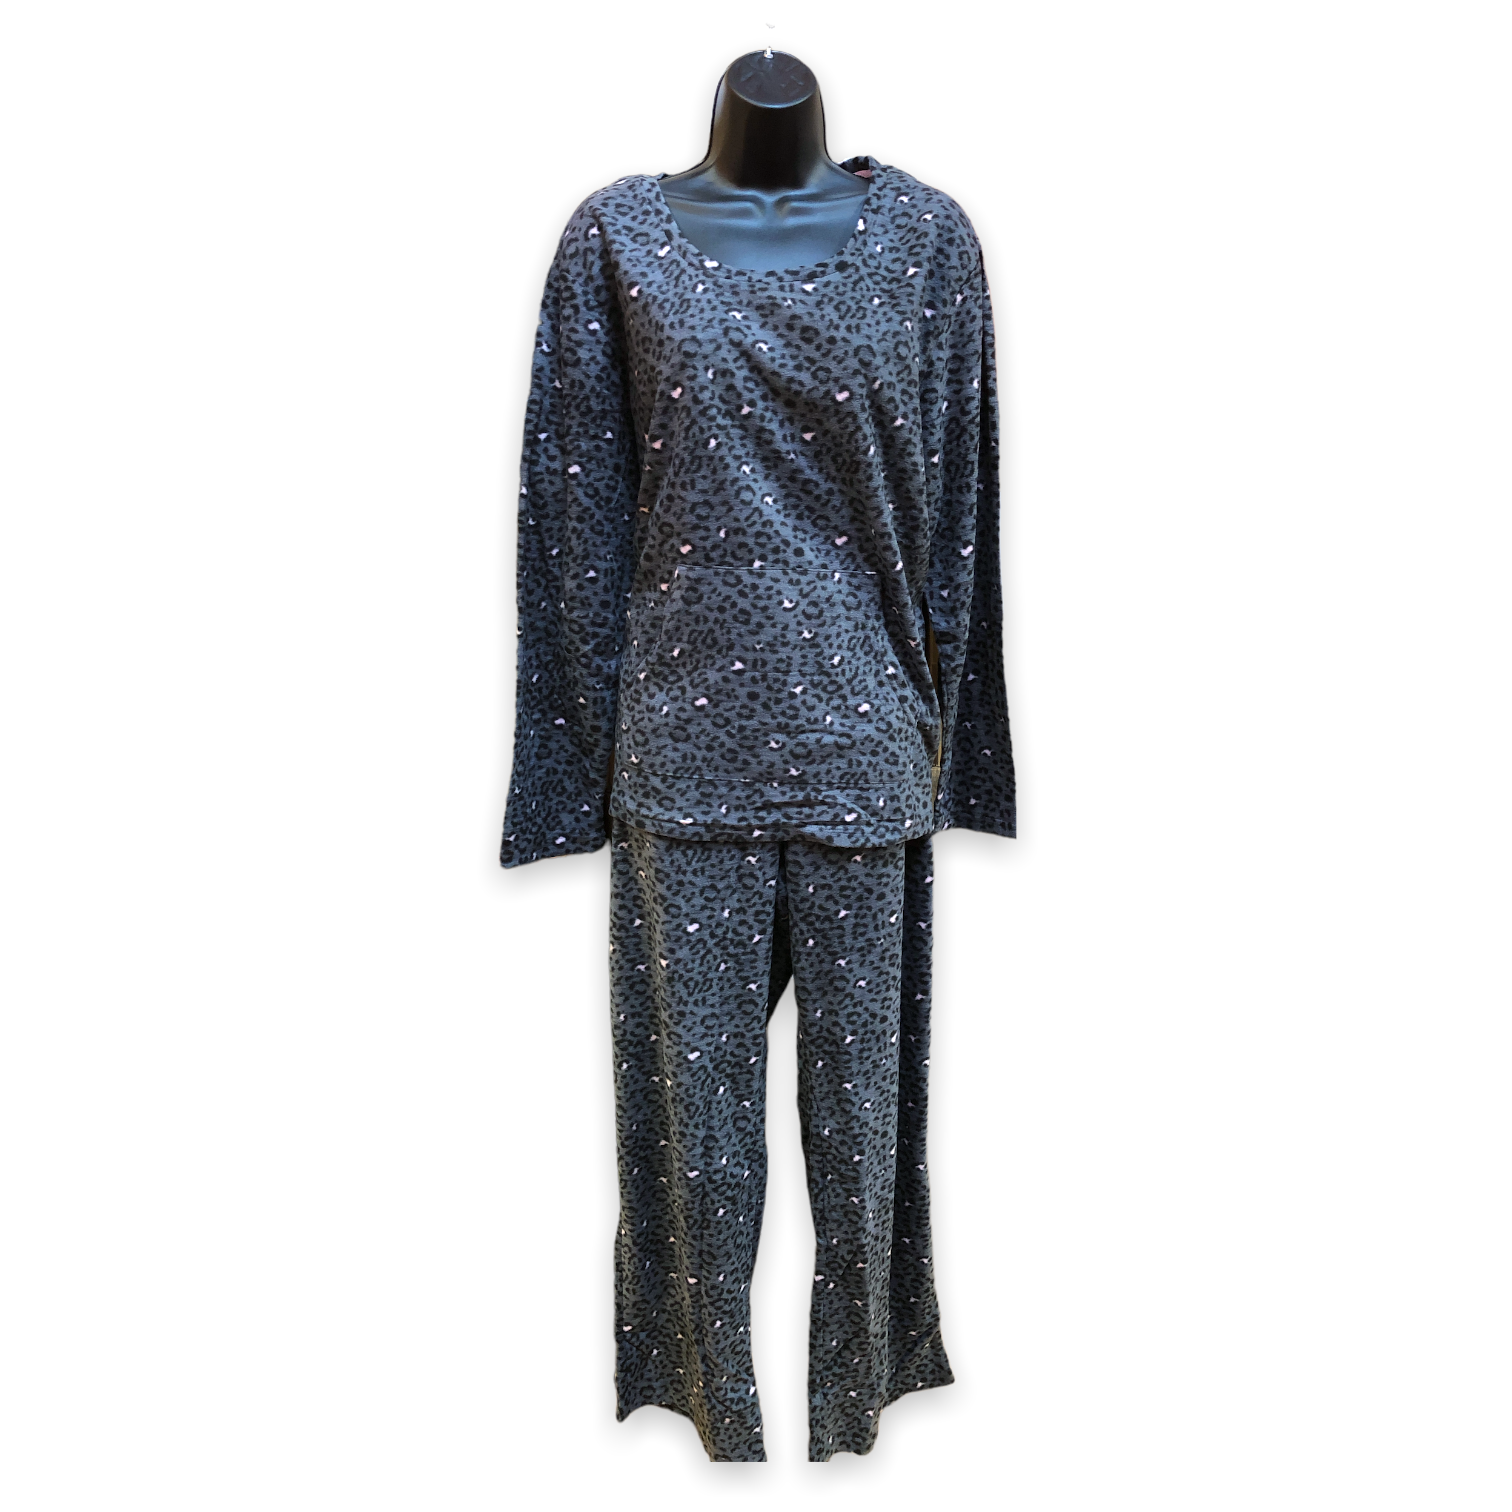 Women's Two Piece Micropolar Printed Pajama Set with Kangaroo Pouch